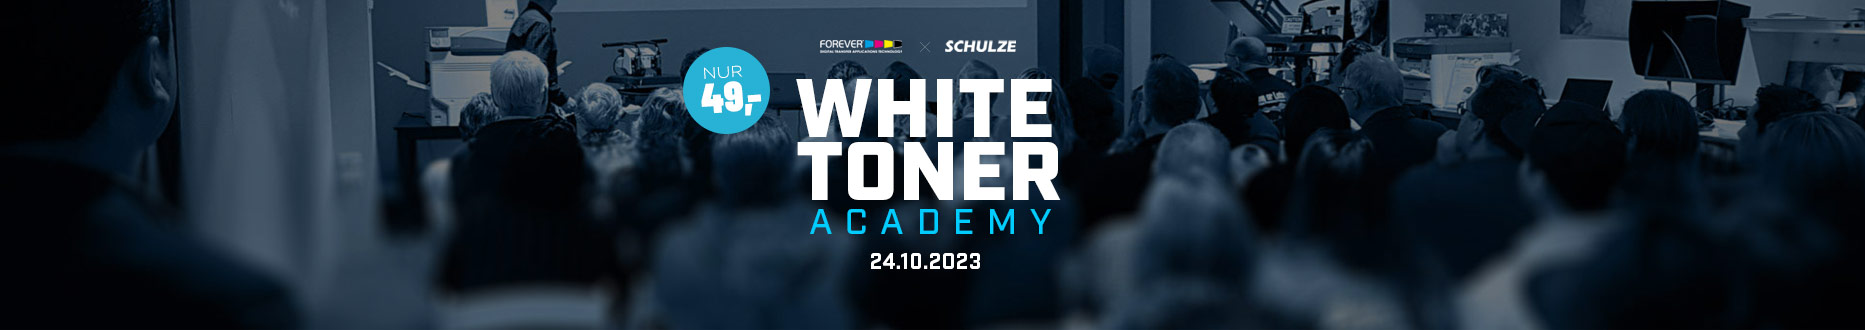 White Toner Academy 2023